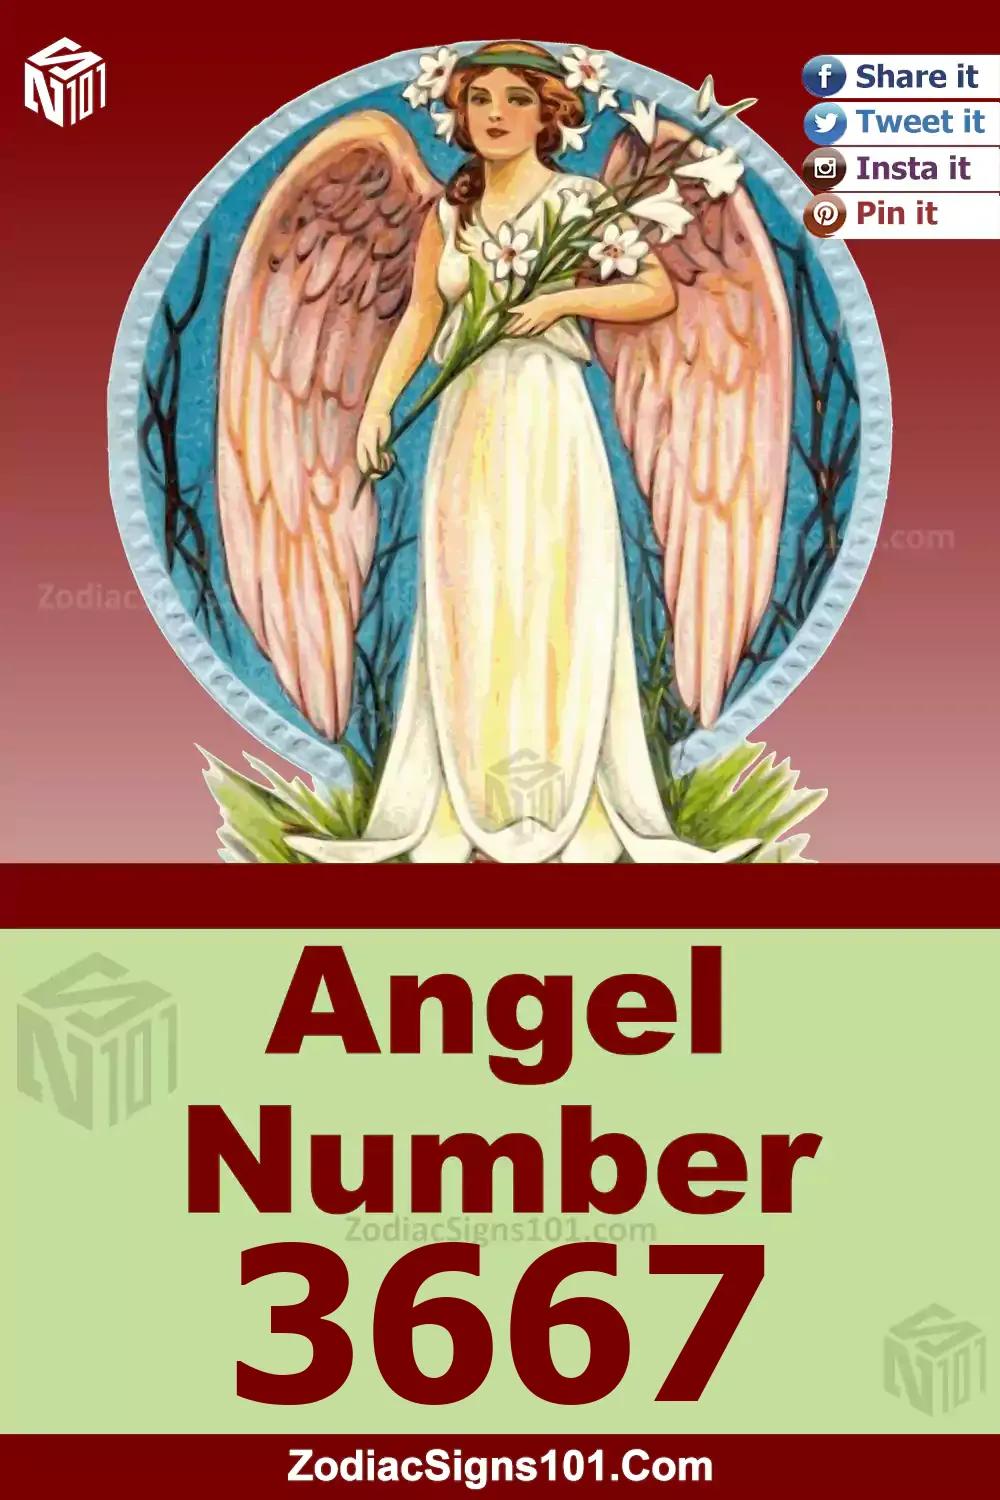 3667-Angel-Number-Meaning.jpg